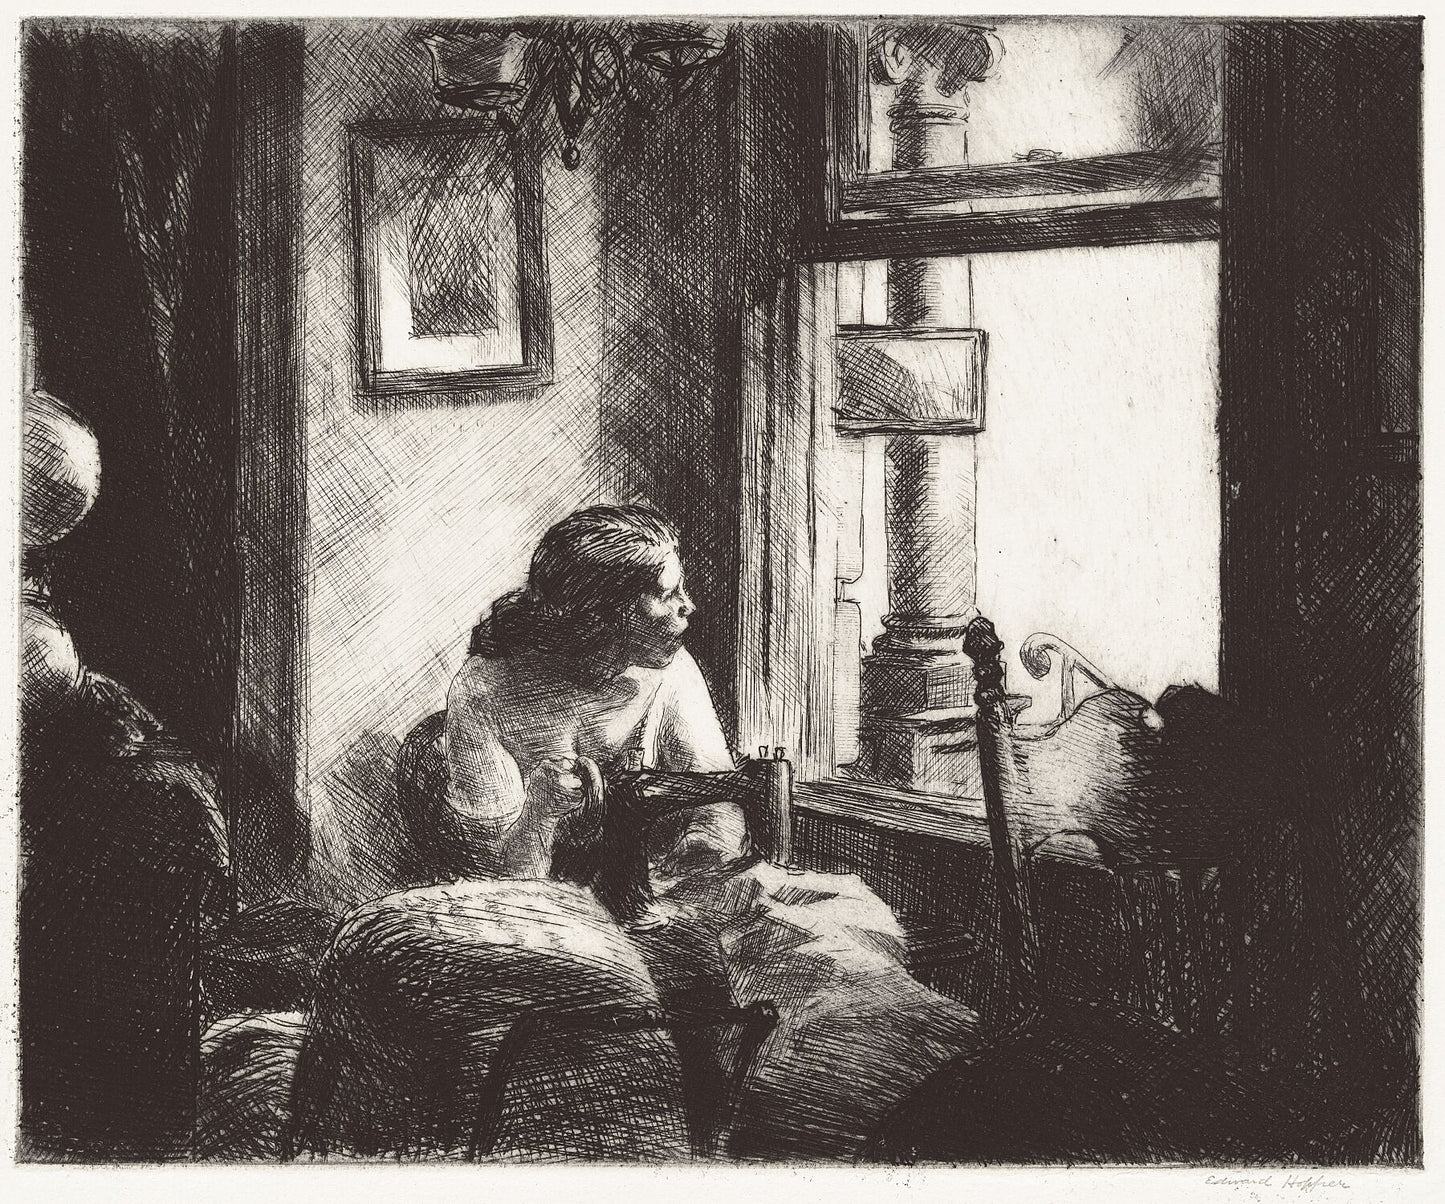 East Side Interior by Edward Hopper - 1922